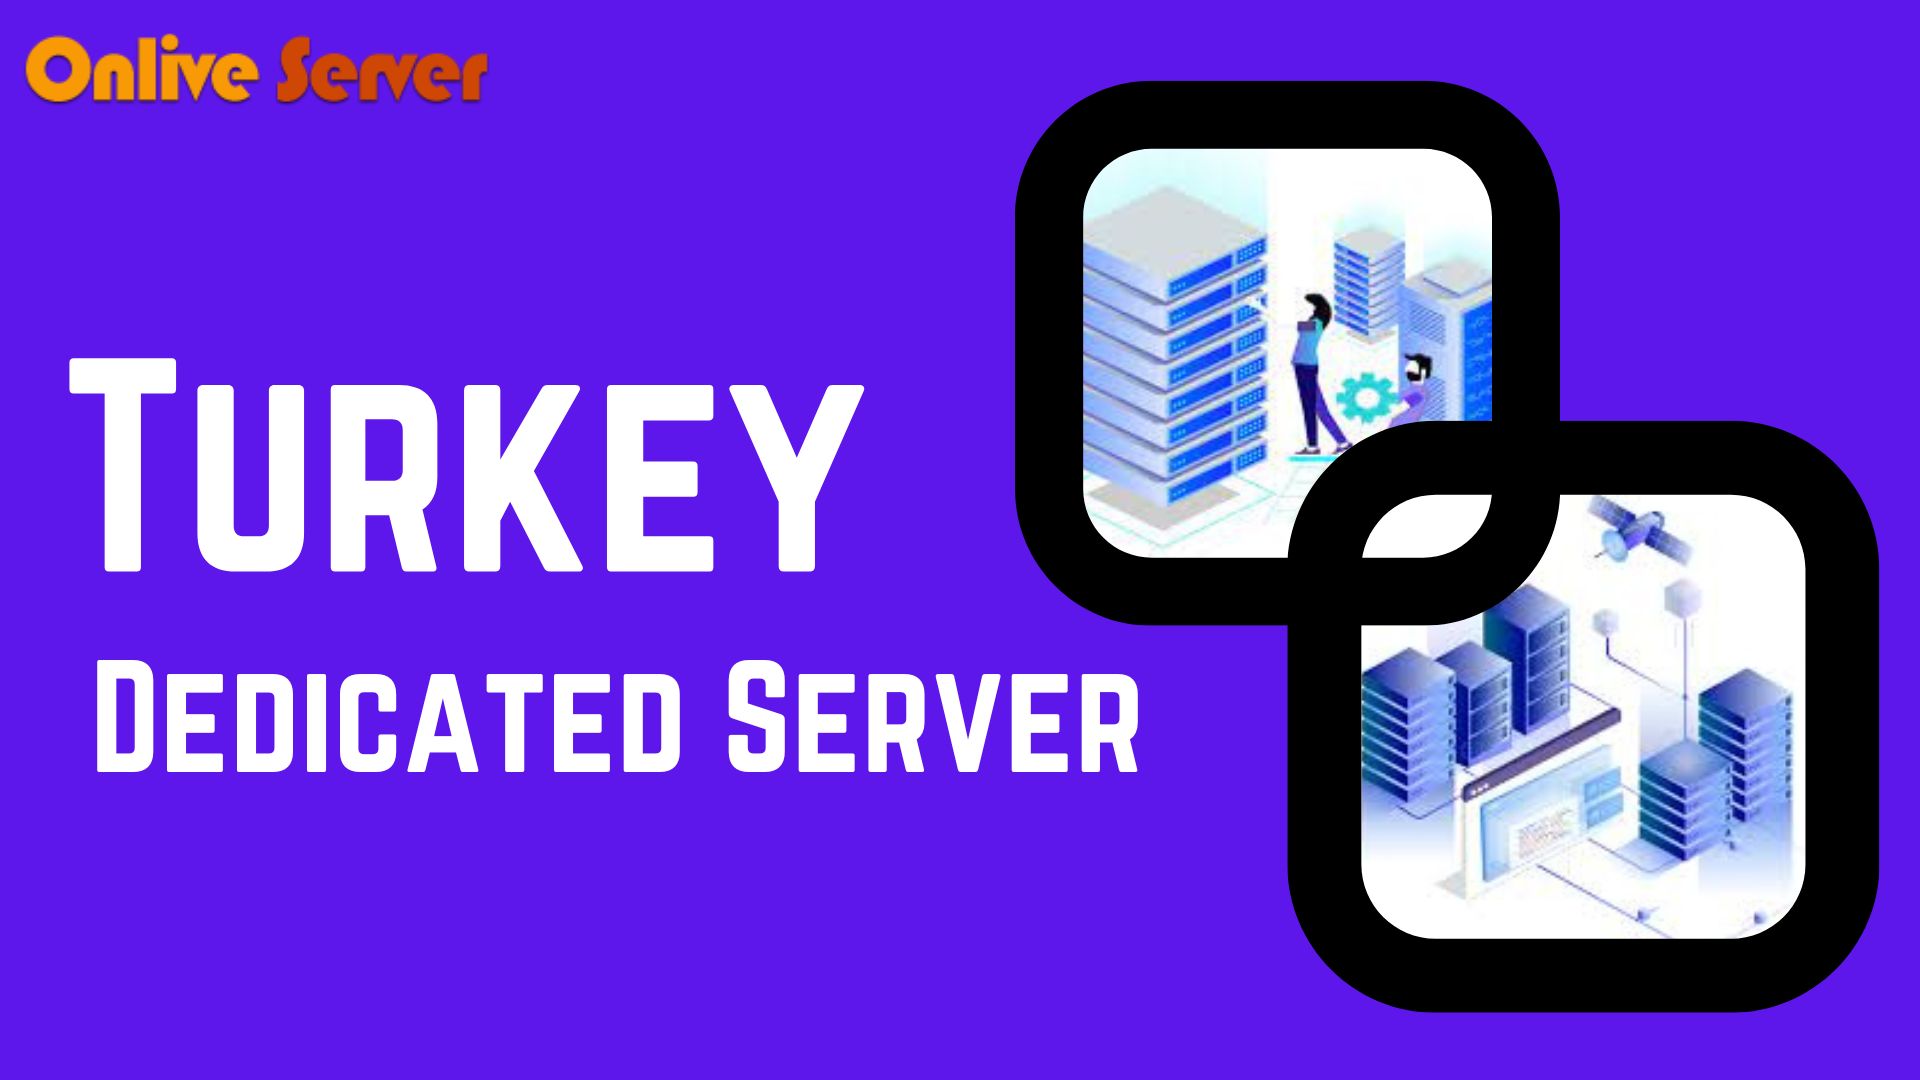 Turkey Dedicated Server